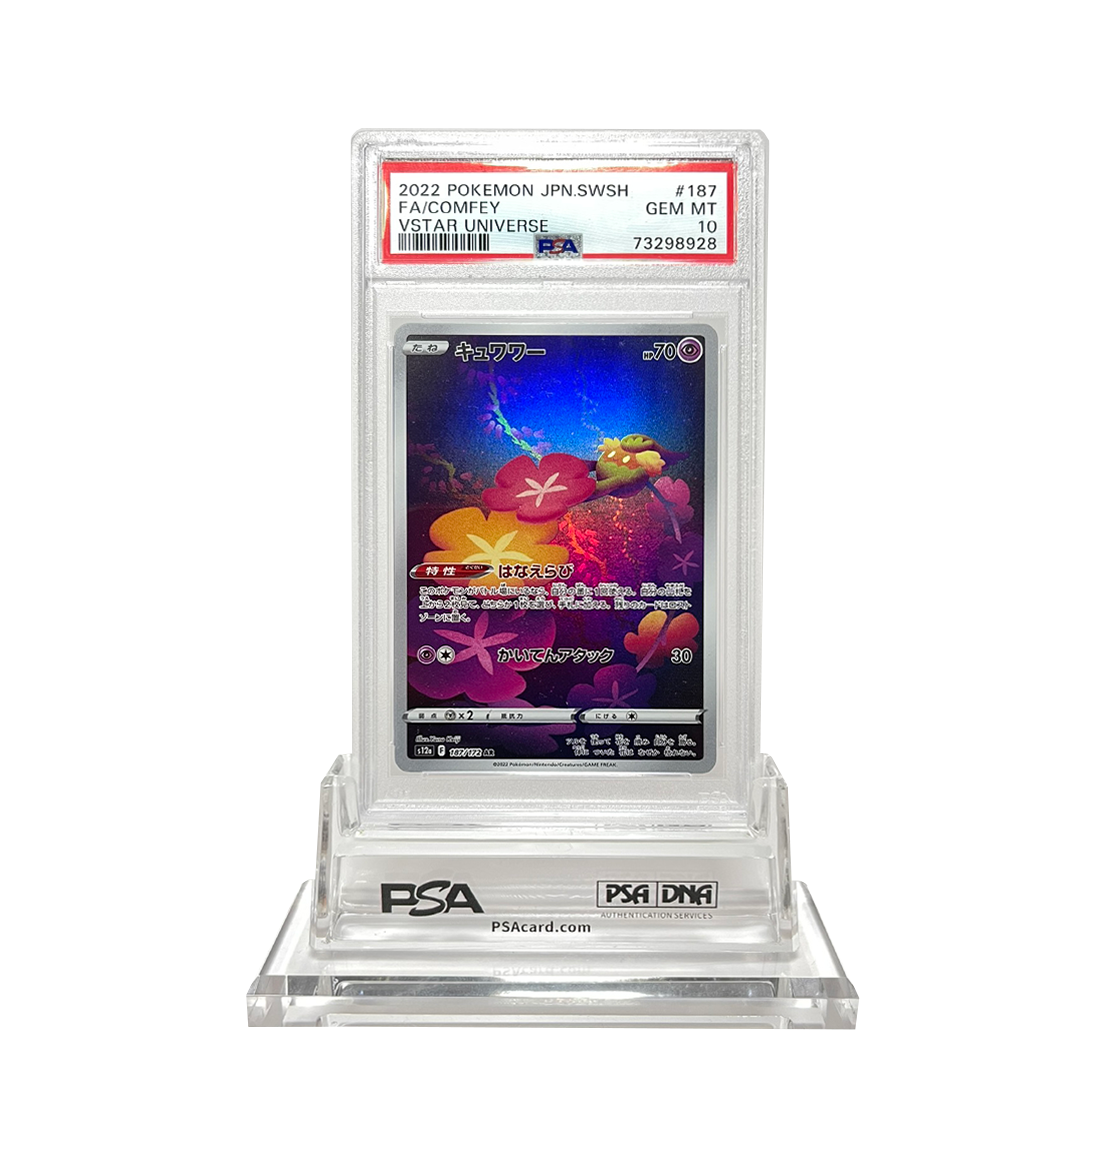 PSA 10 Comfey 187 Vstar Universe Japanese Pokemon card